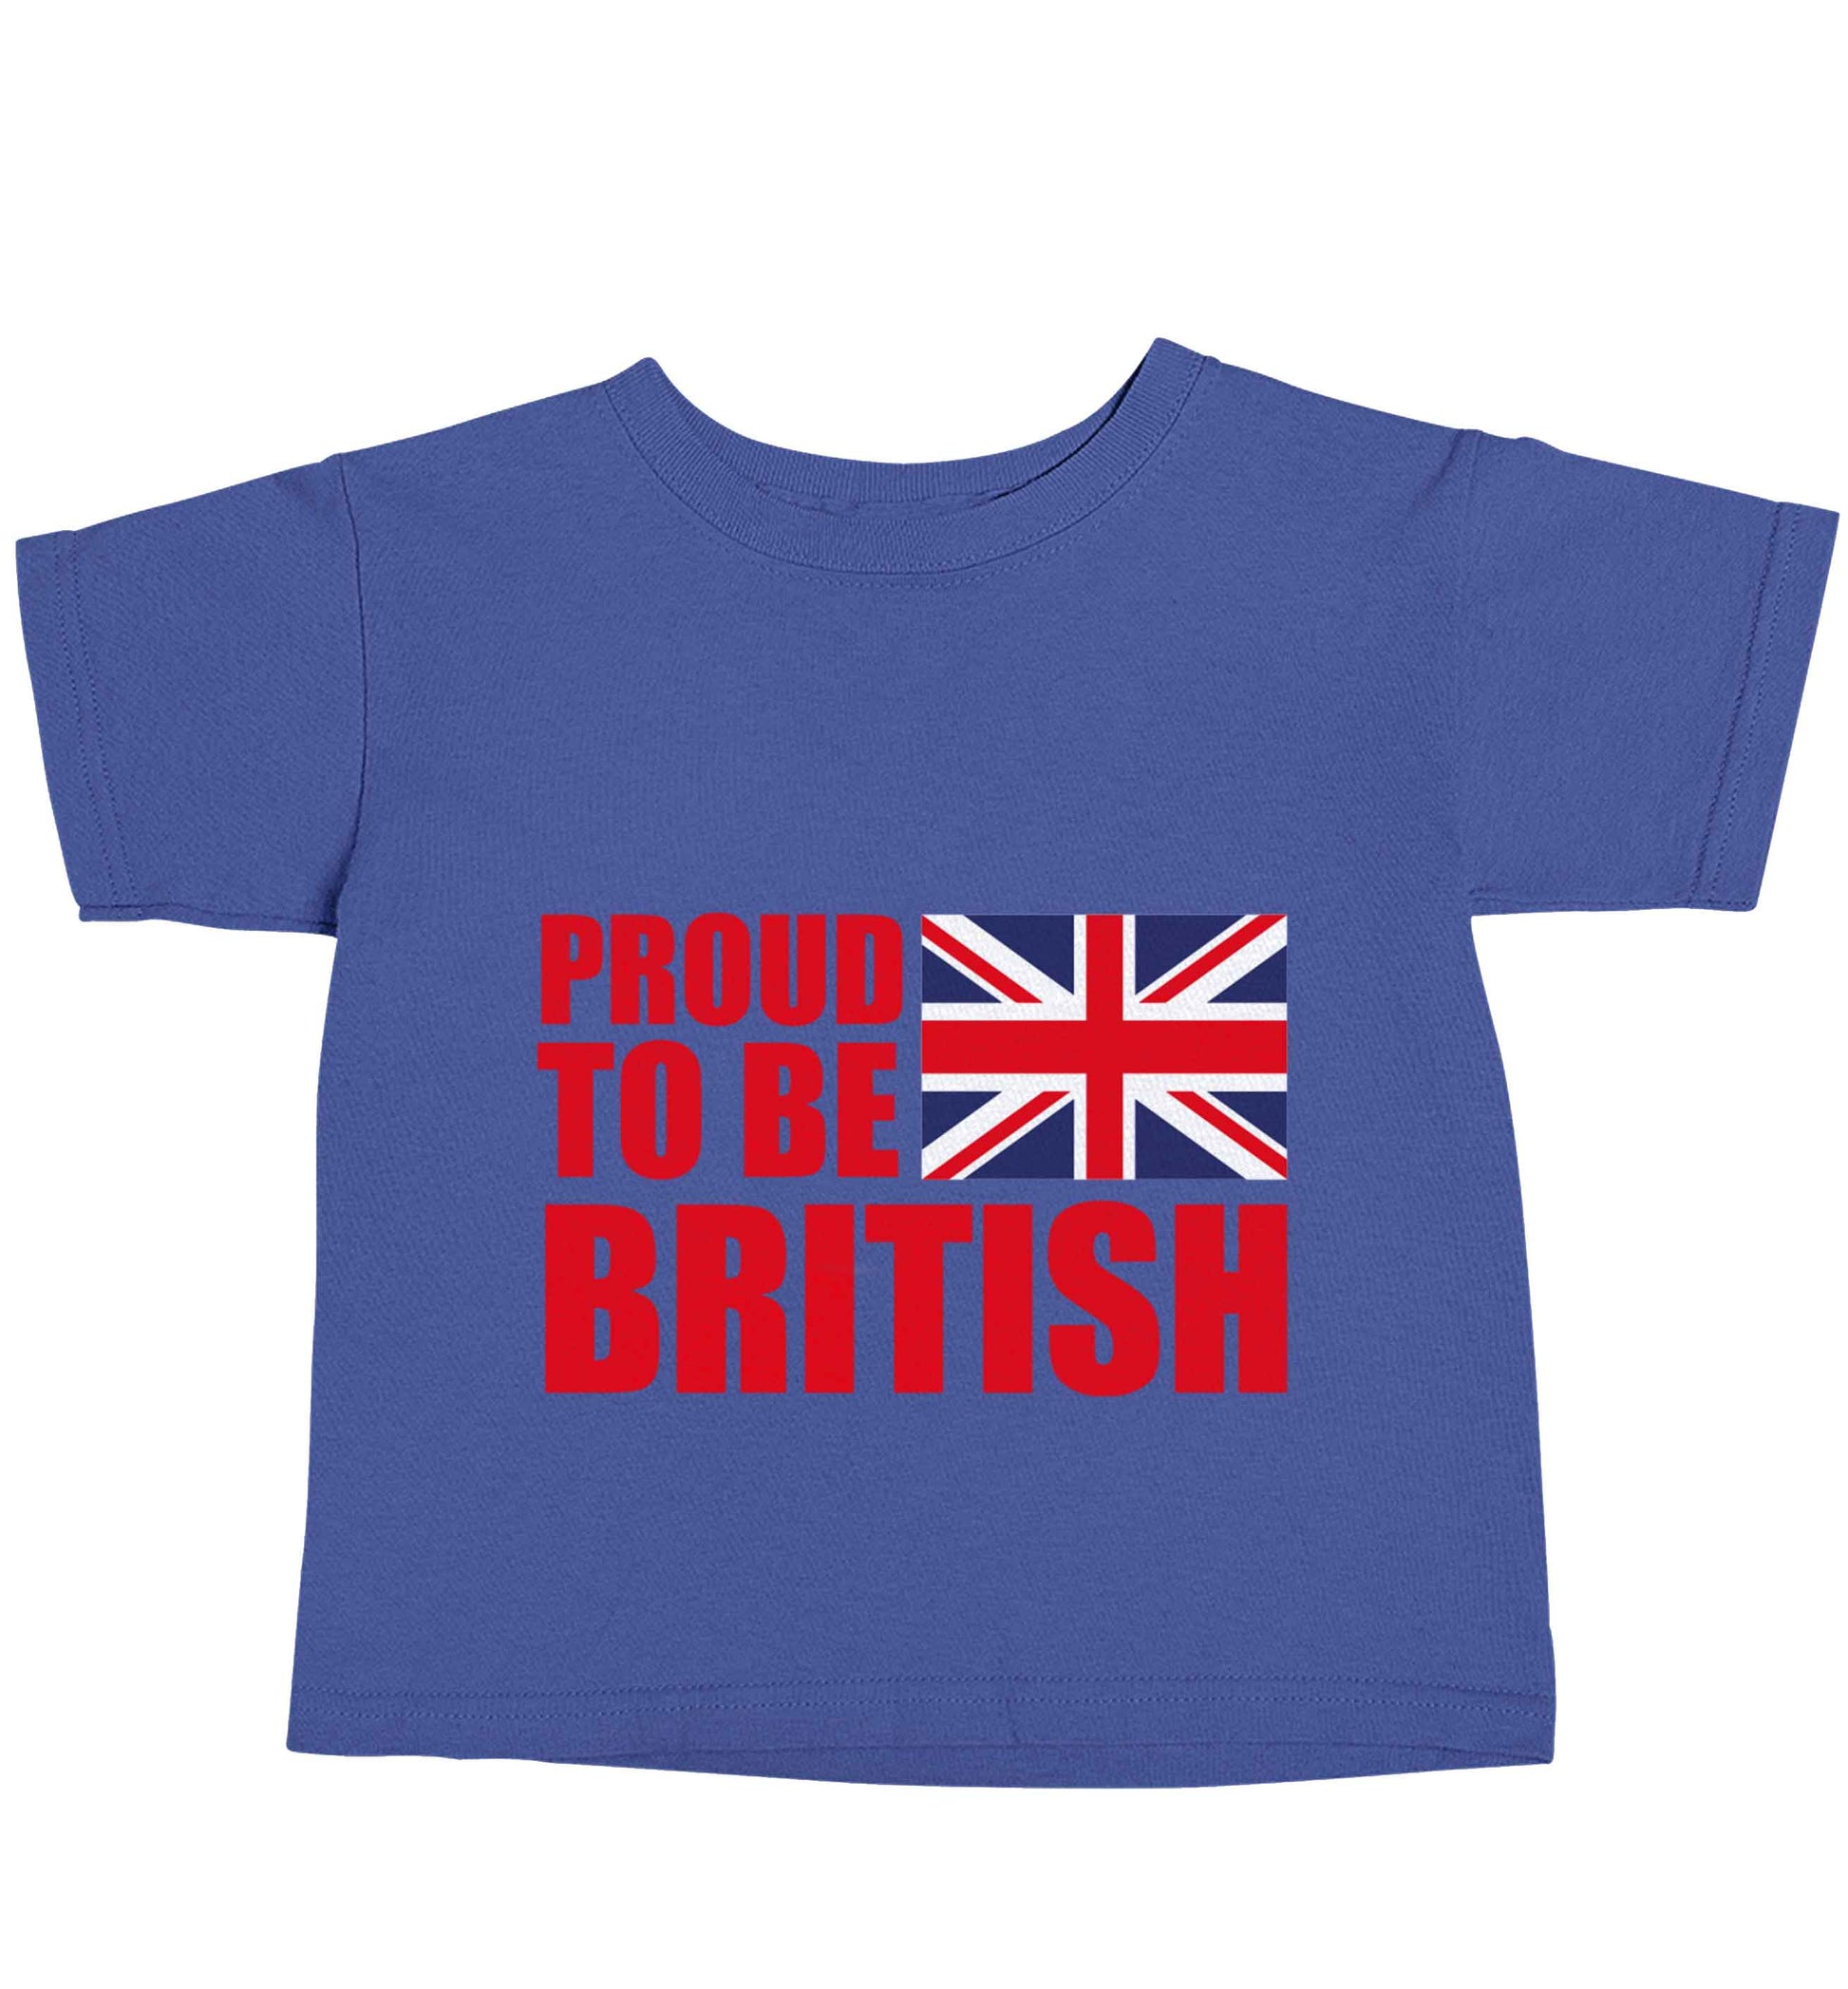 Proud to be British blue baby toddler Tshirt 2 Years